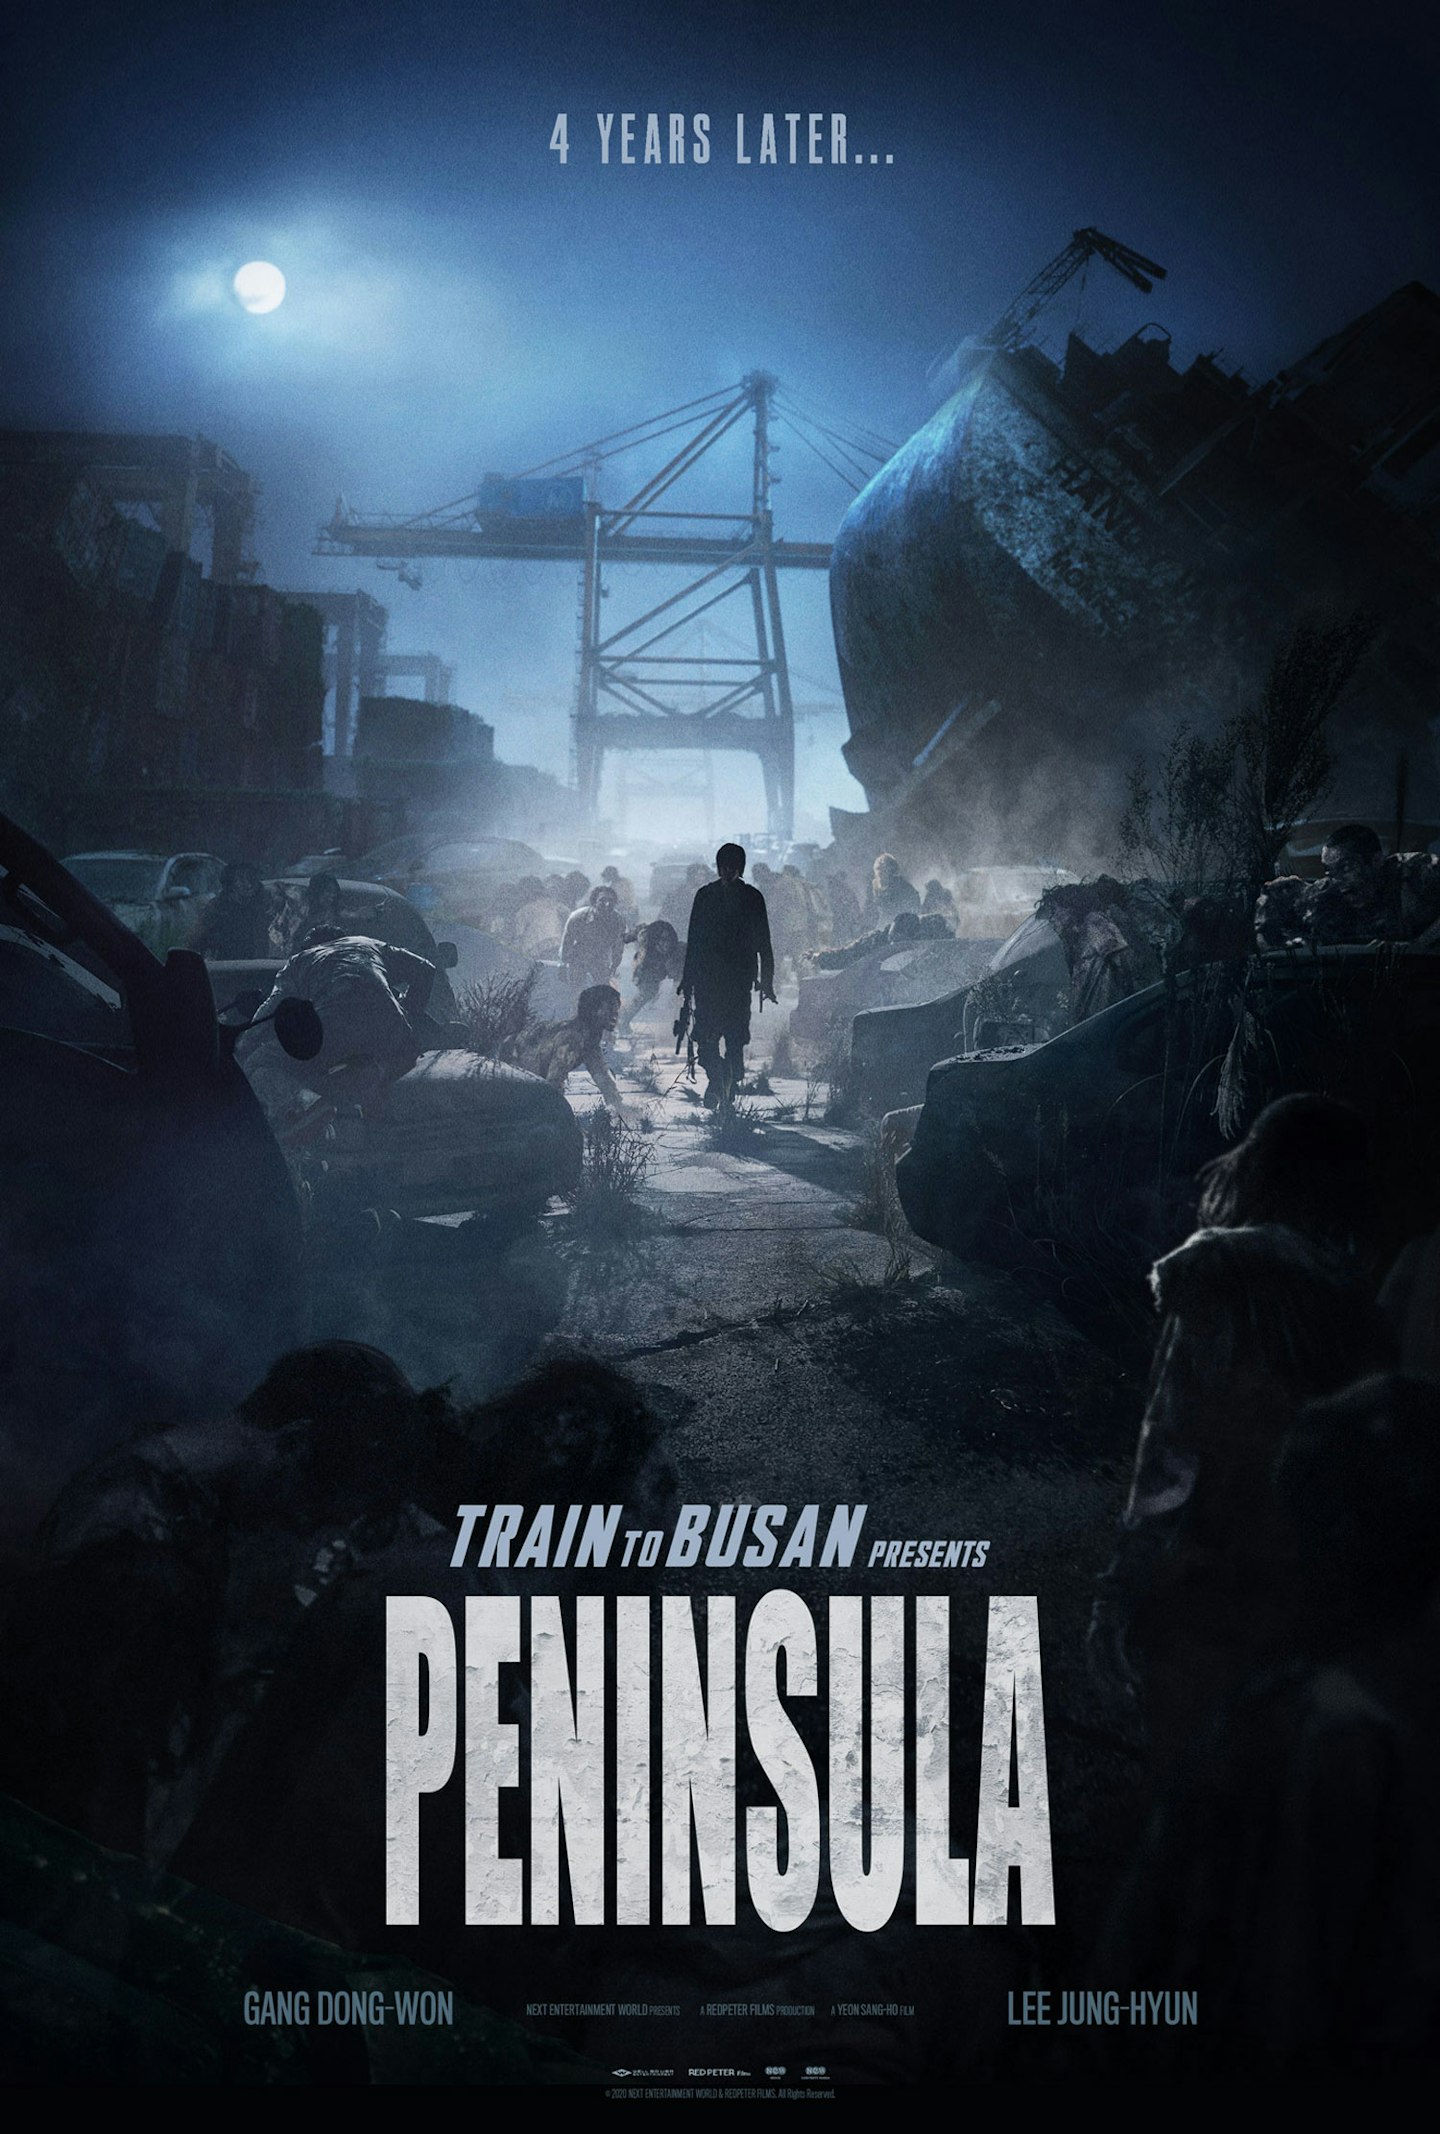 Peninsula – Train To Busan poster